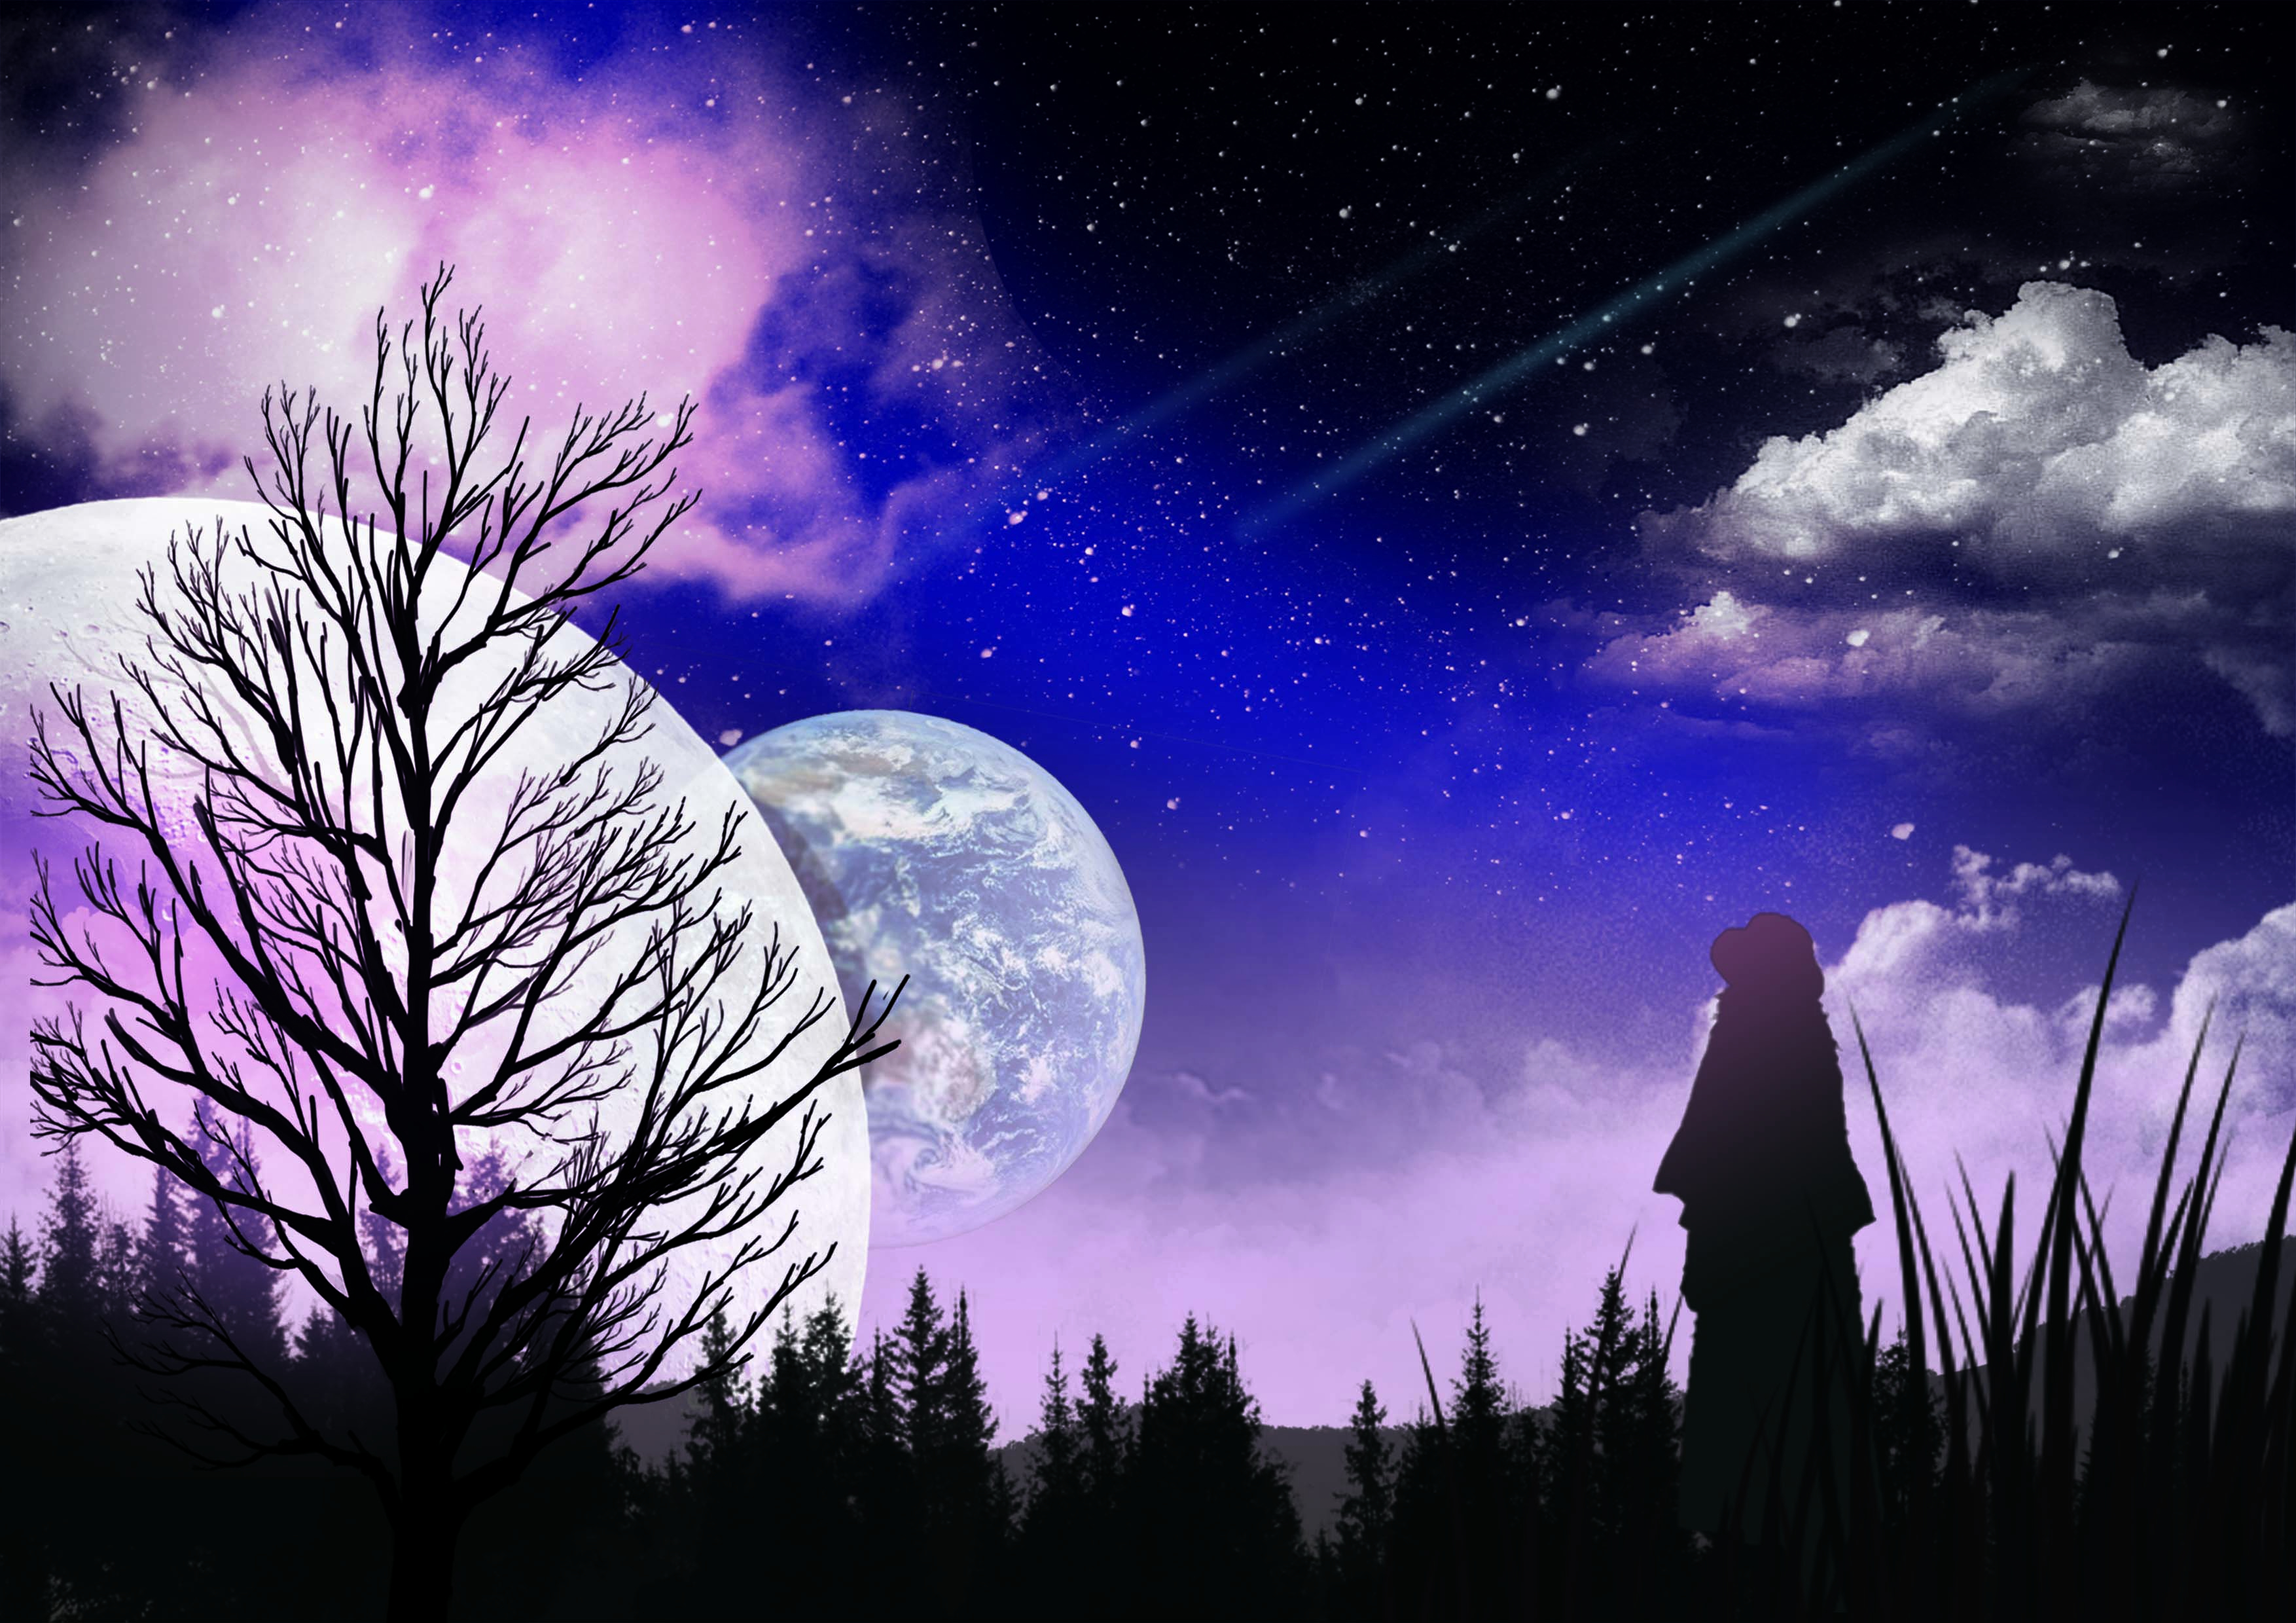 anime night sky with full moon